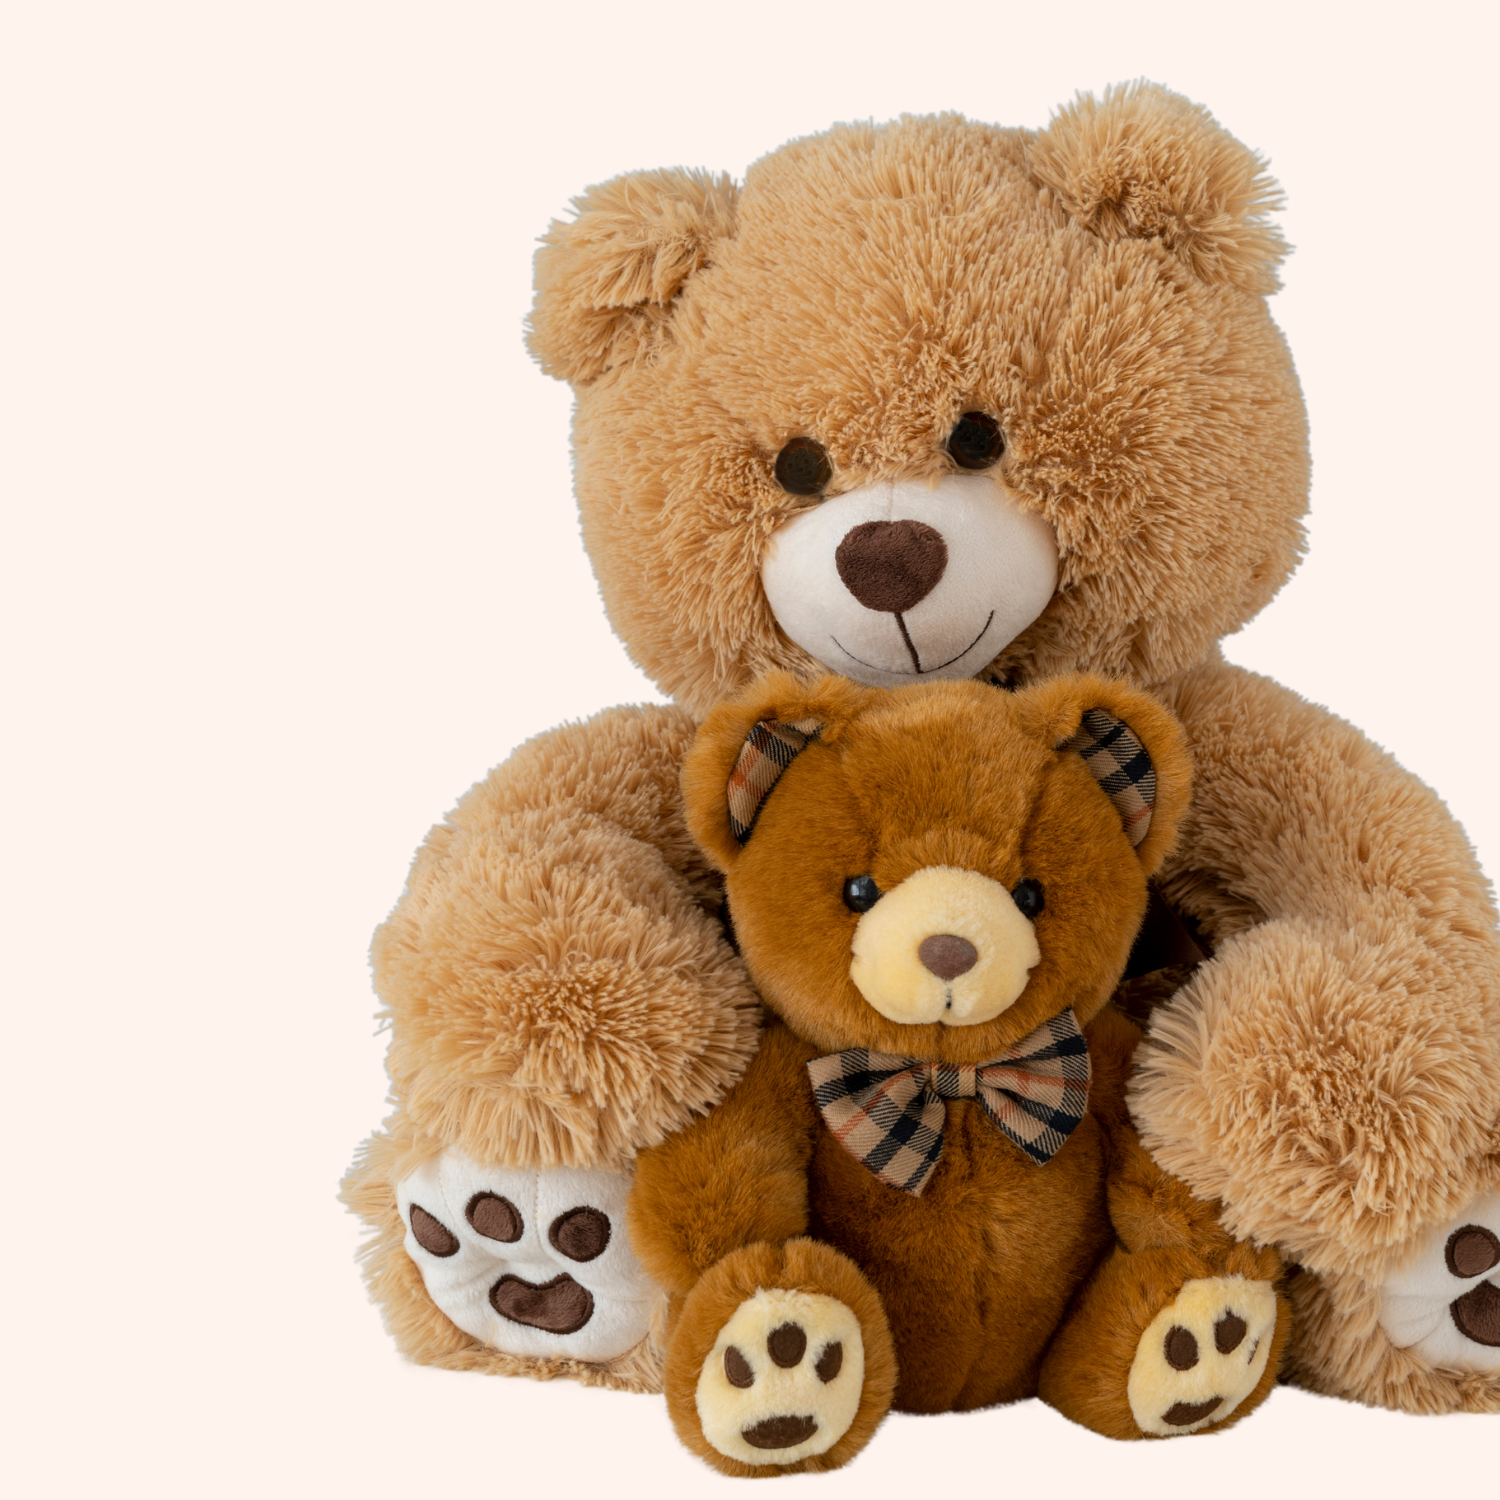 Teddybear Gifts